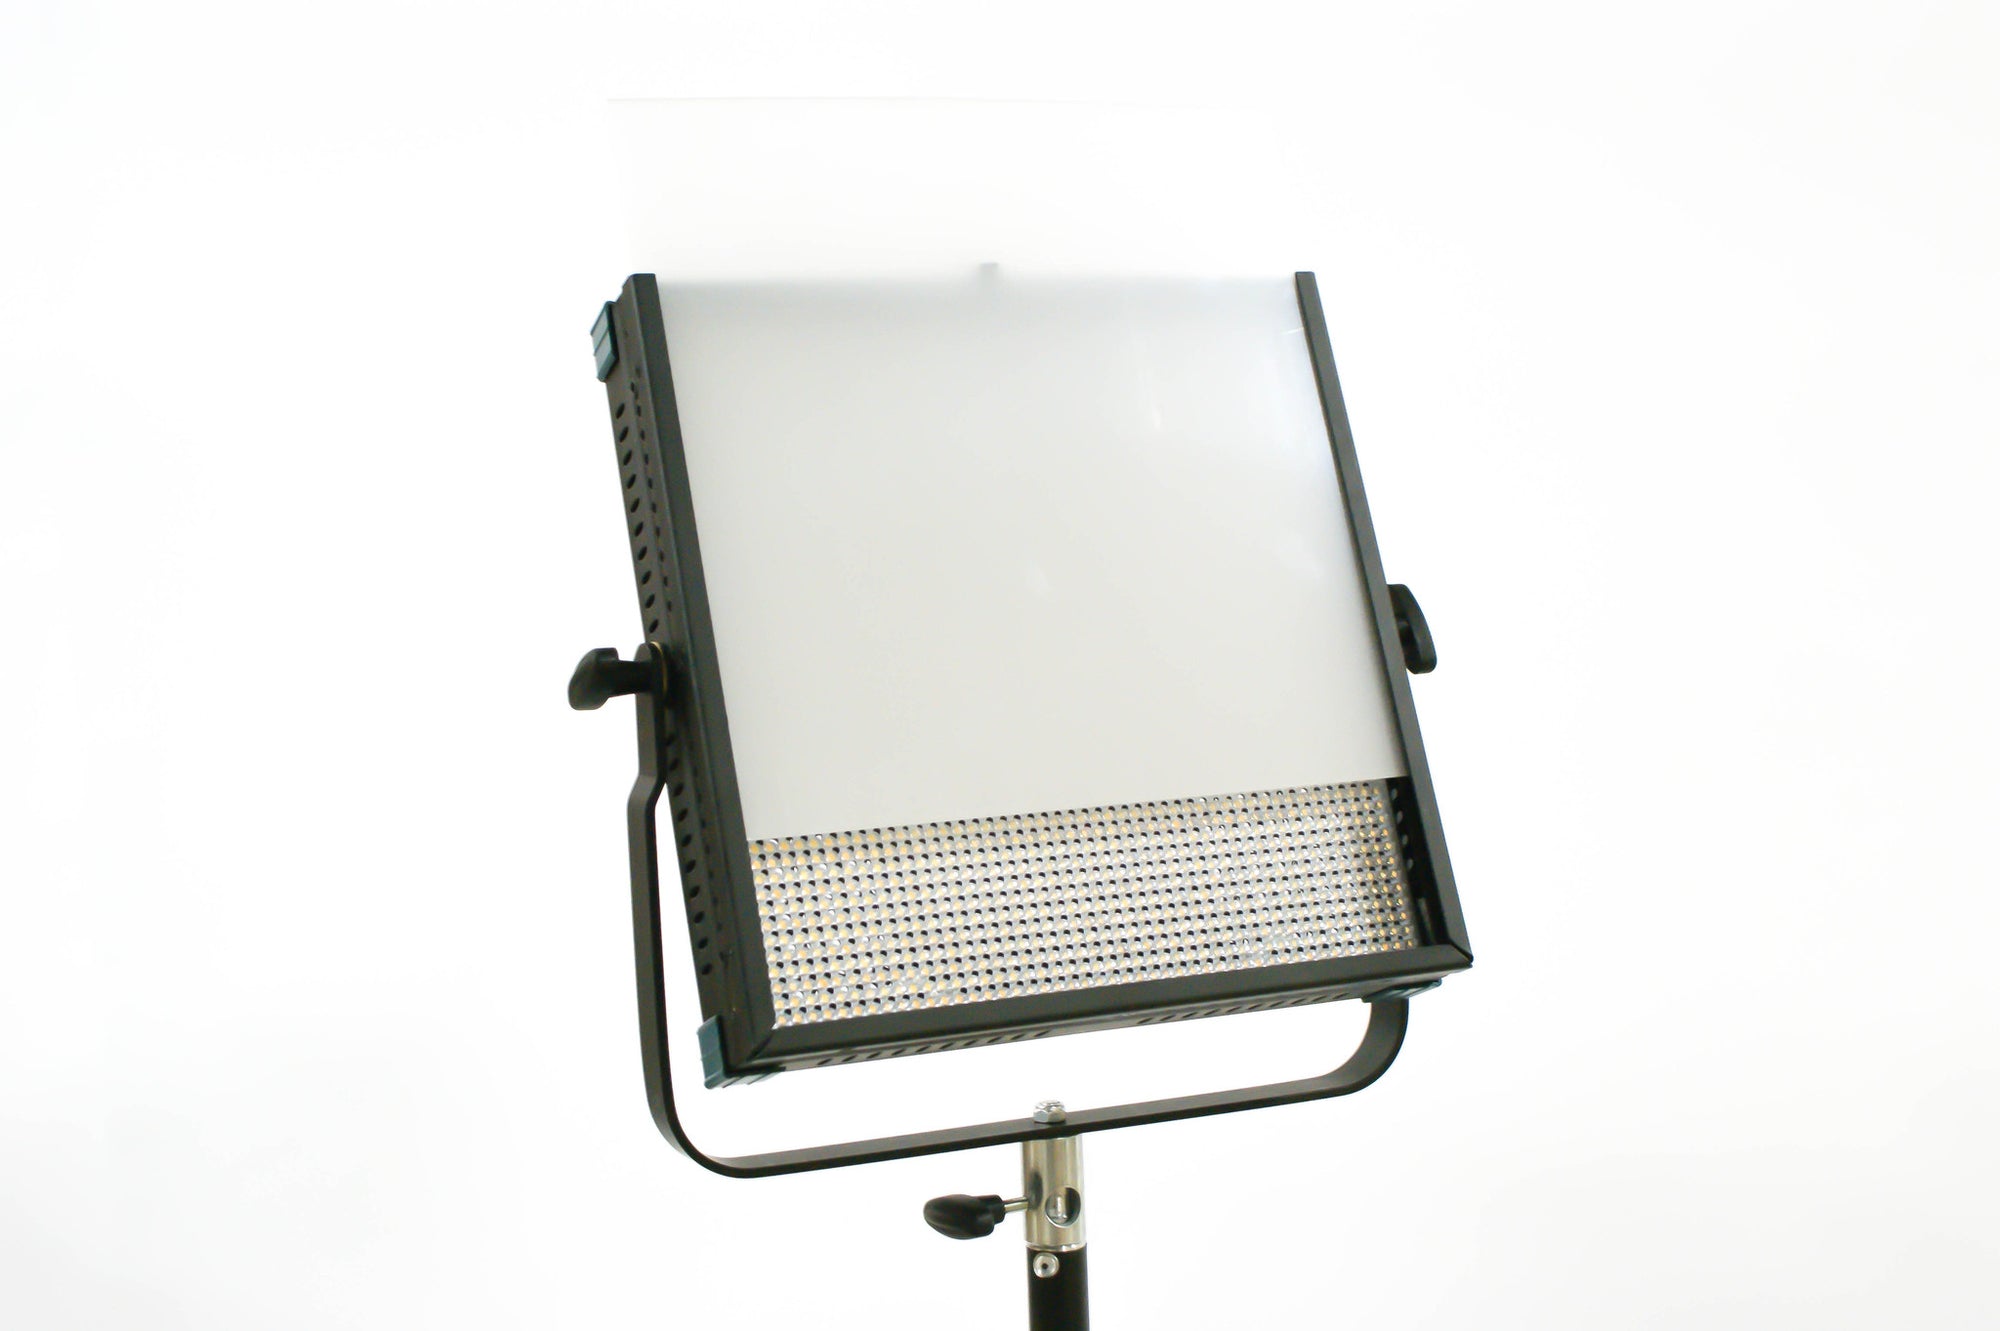 Intellytech Socanland NovaCTD - Digital, Bi-Color, 1x1 LED Light Panel with diffusion